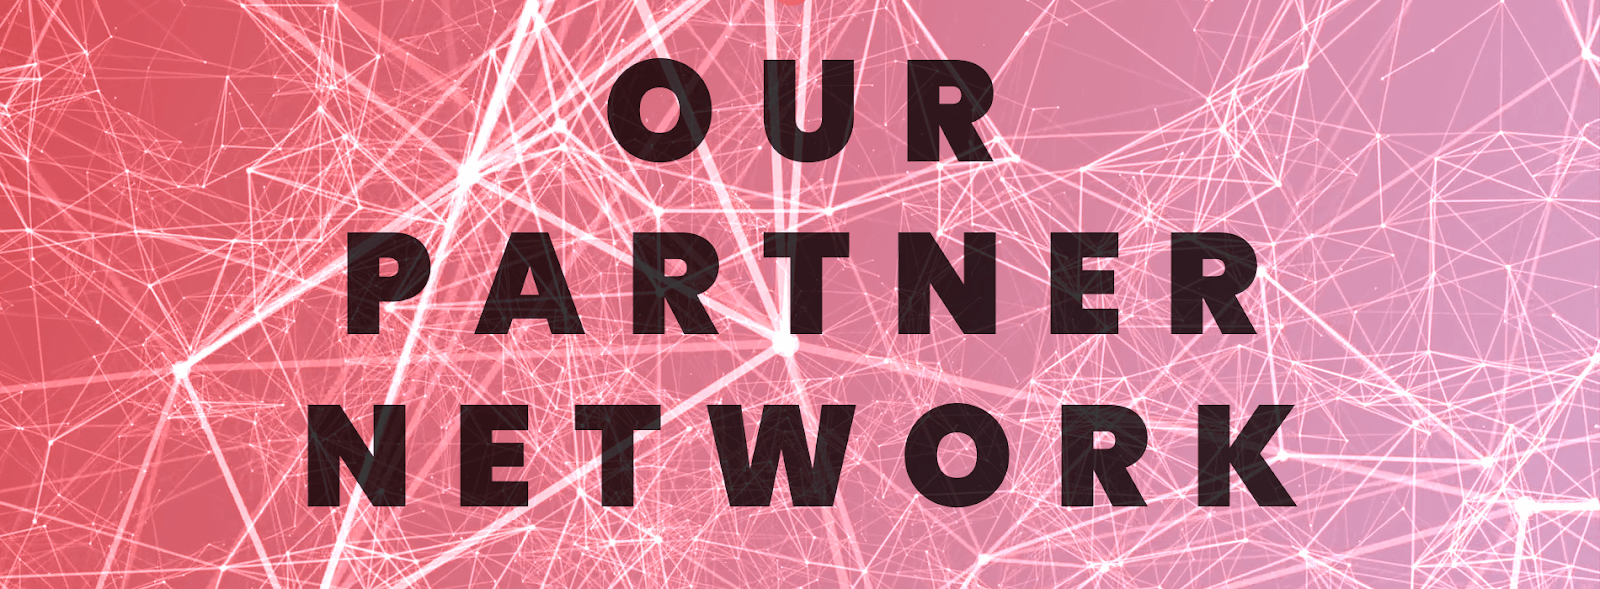 Partner Network Graphic